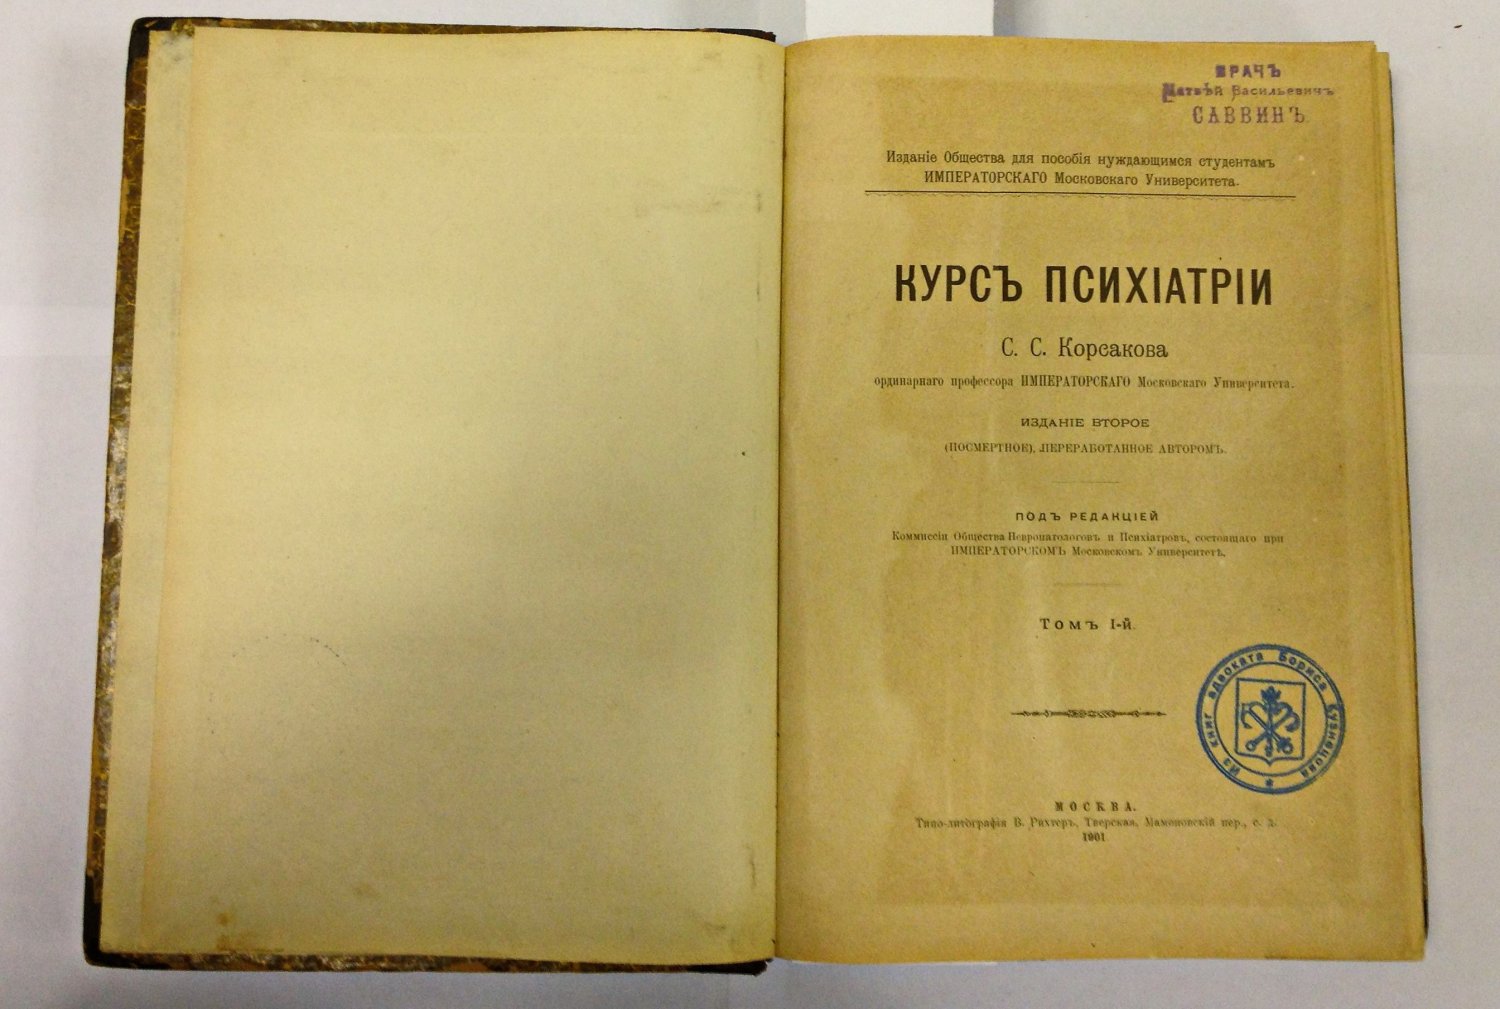 Korsakov S.Psychiatry course.2nd edition/ S. Korsakov. Kurs psihiatrii. Izdanie vtoroe.Moscow, 1901